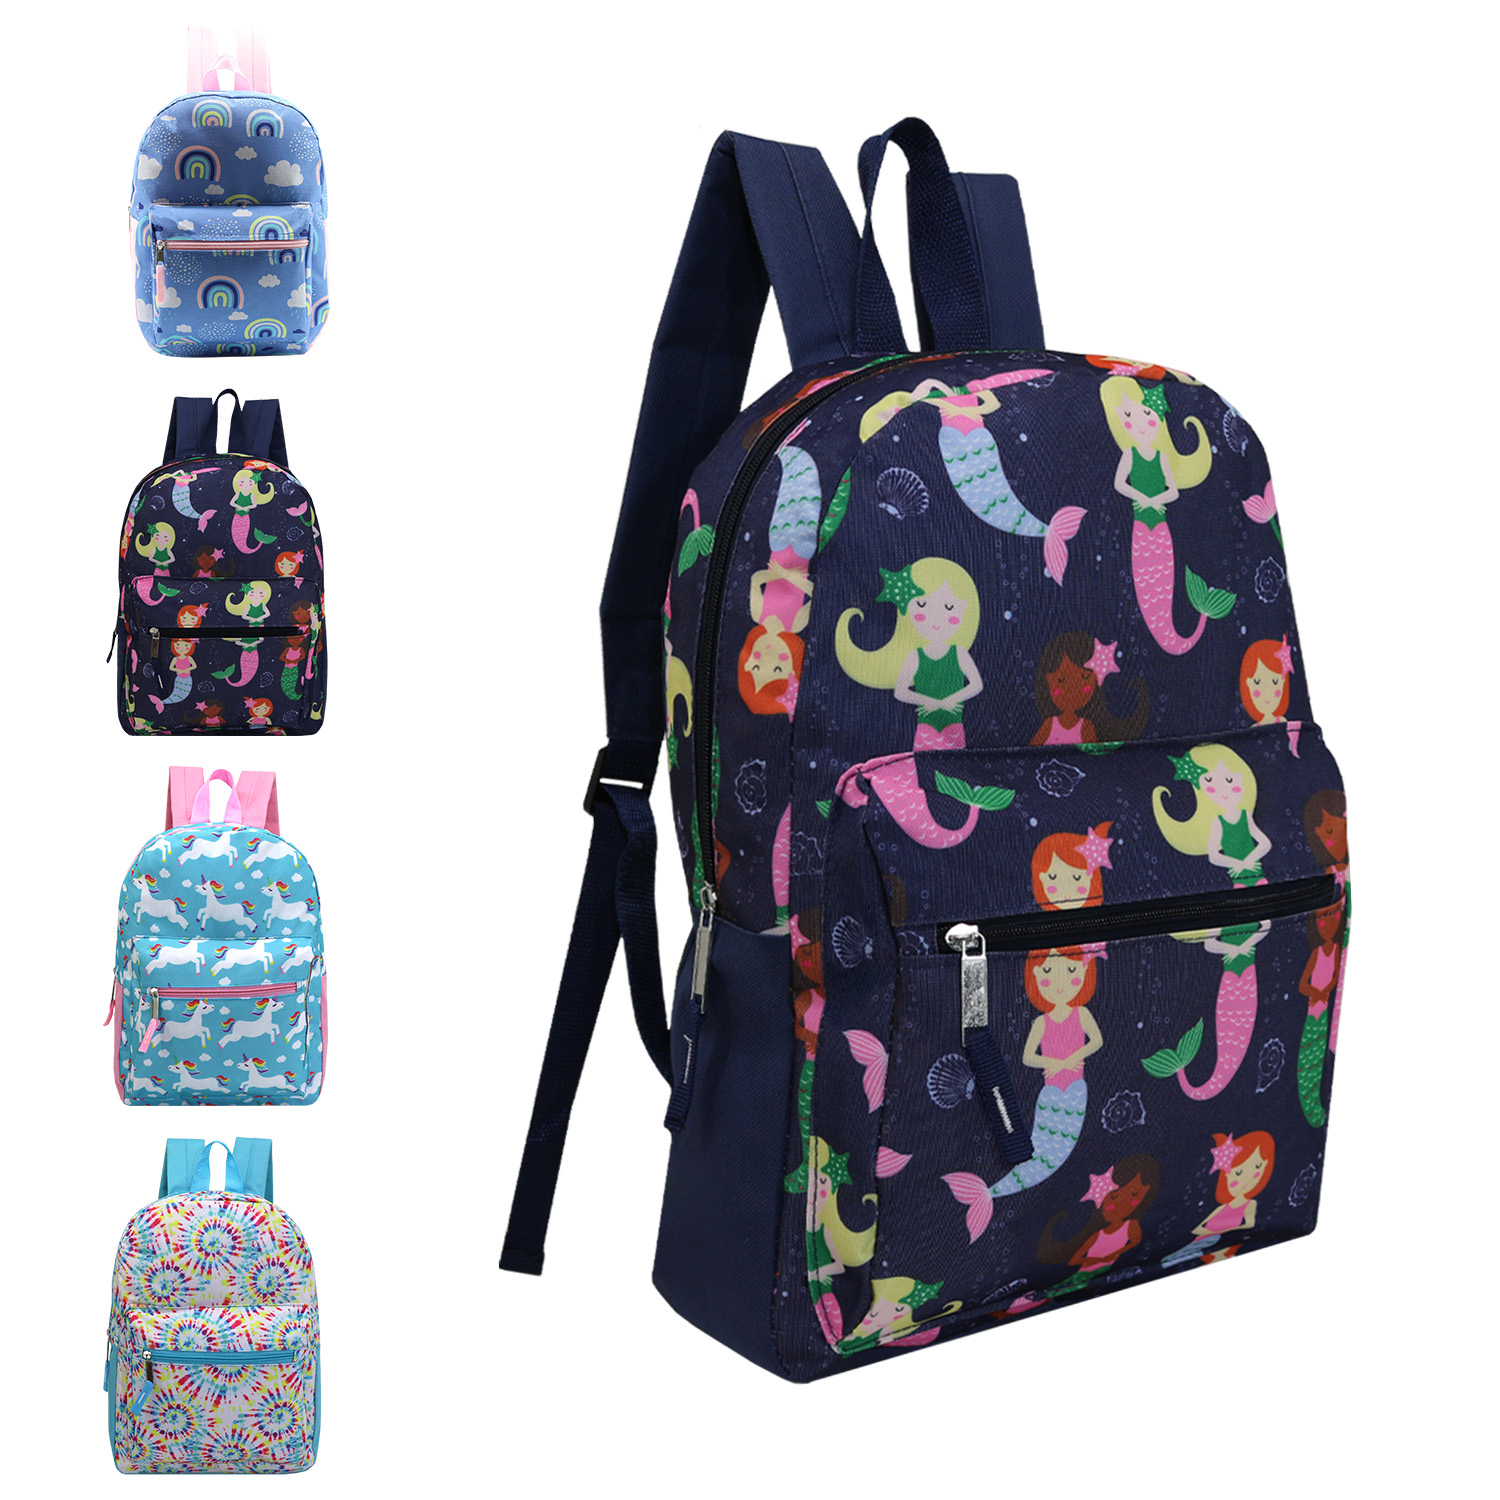 ''15'''' Lightweight Classic Style Printed Backpacks w/ Adjustable Padded Straps - Mermaid, UNICORN, & 